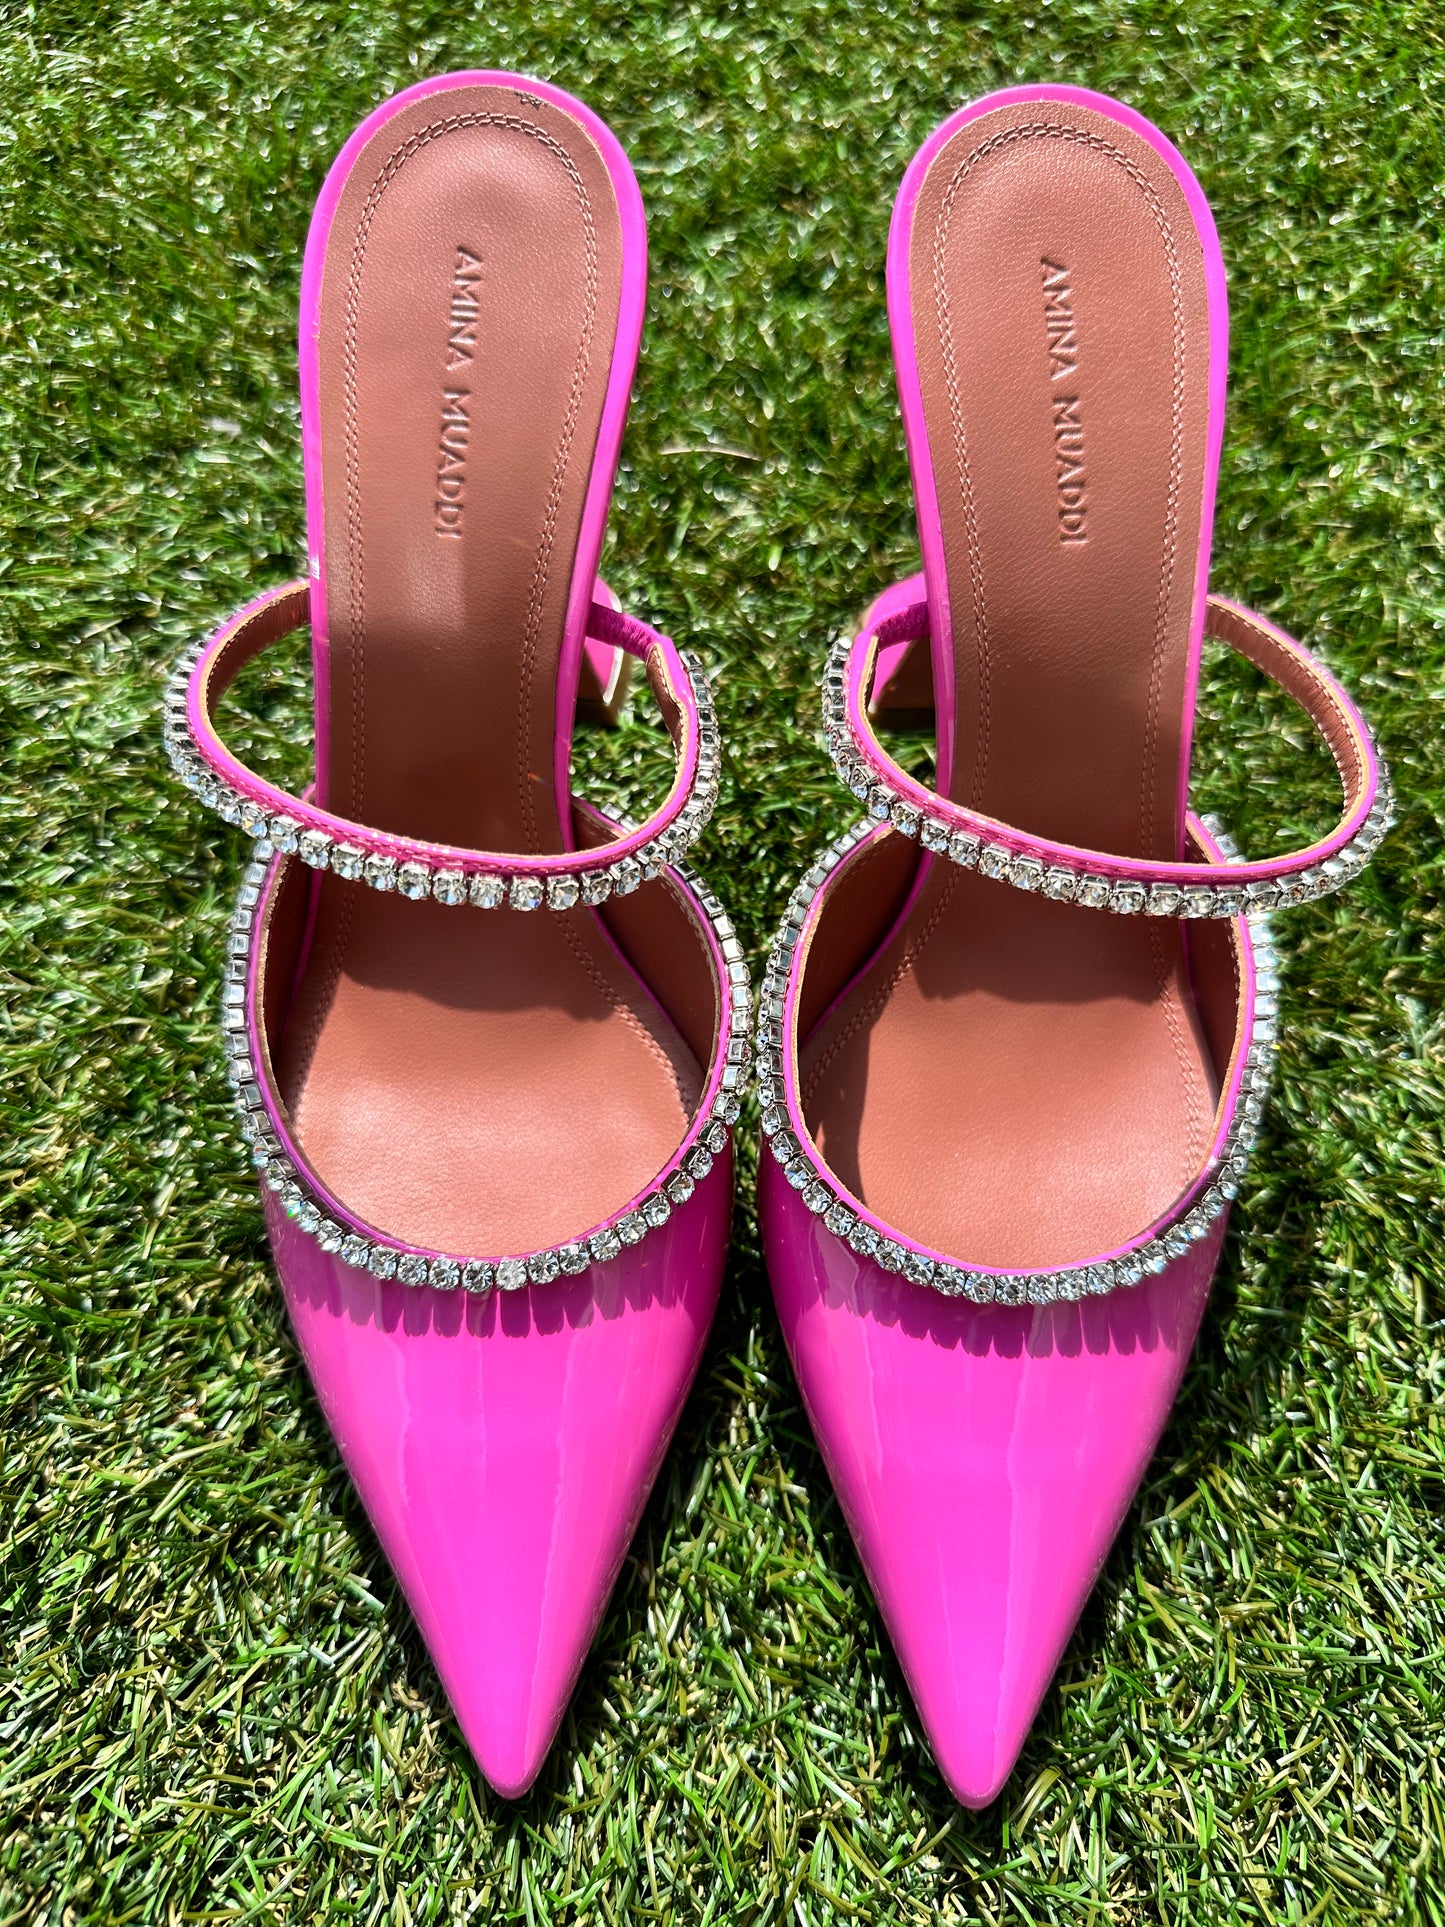 Amina Muaddi Gilda Patent Pink Pointed Toe Crystal Pumps Mules